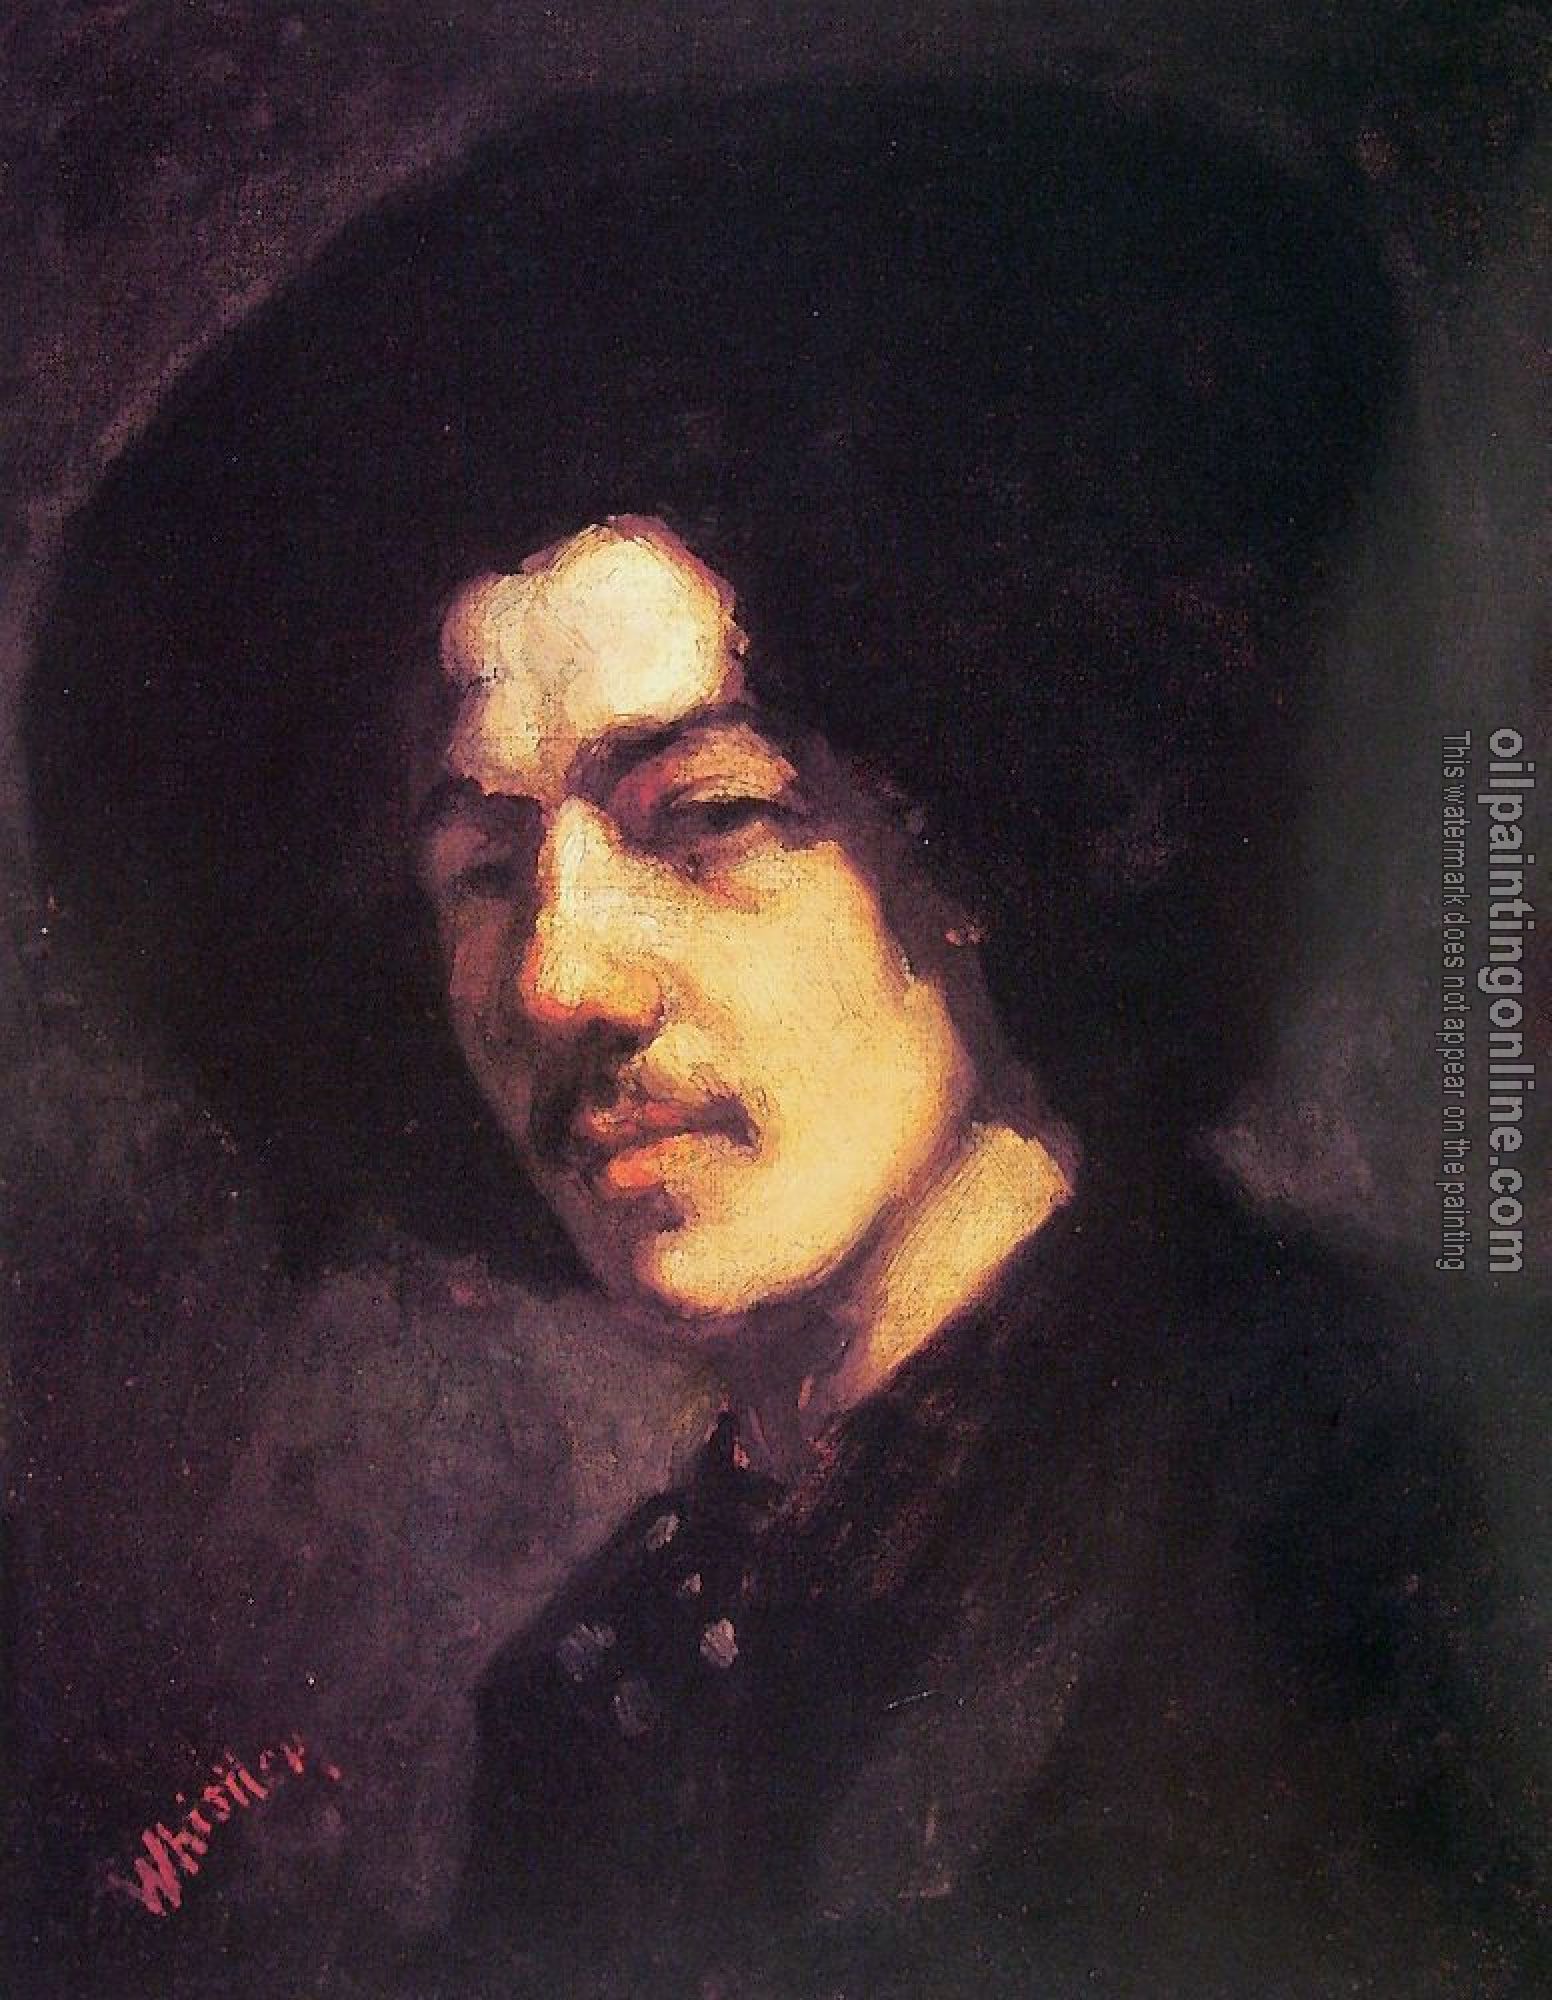 Whistler, James Abbottb McNeill - Portrait of Whistler with Hat